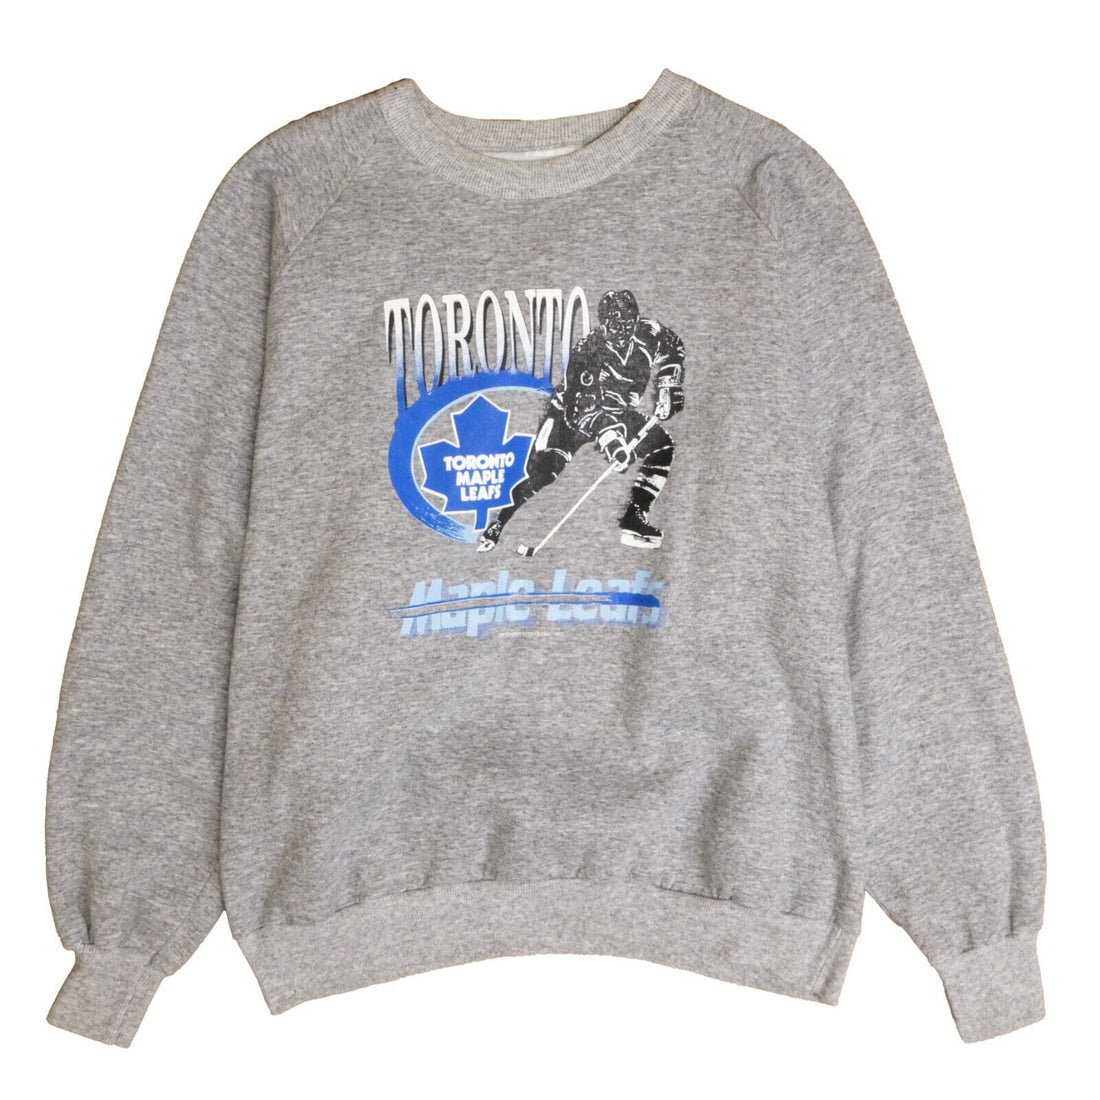 Vintage Toronto Maple Leafs Sweatshirt Crewneck Size Large 1993 90s NFL